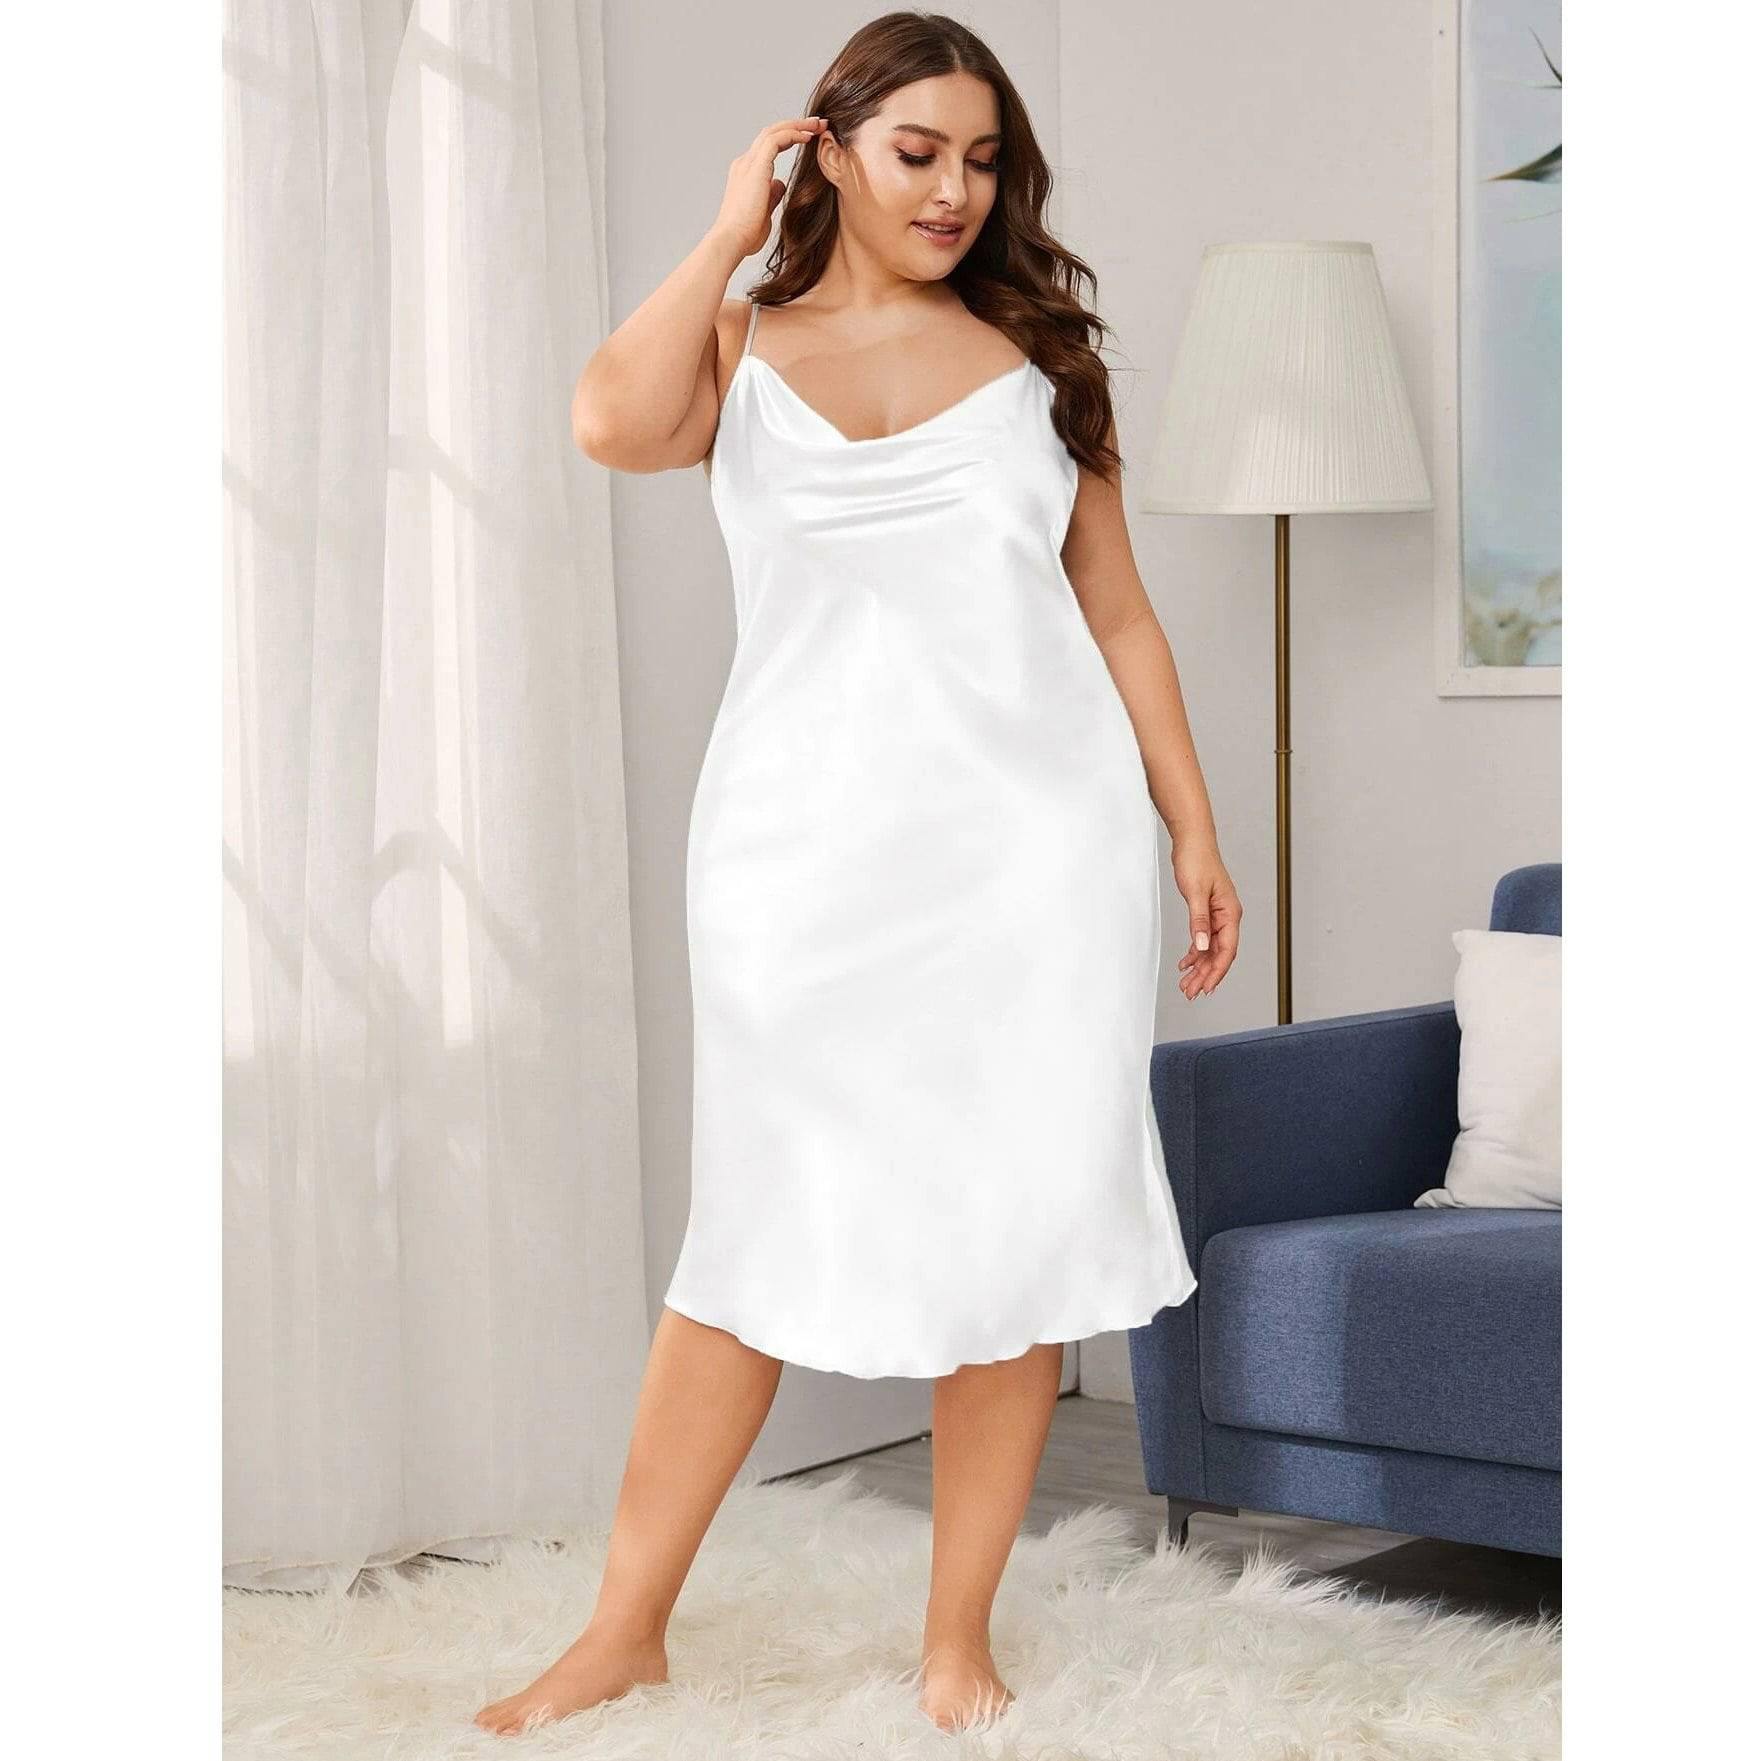 Bras N Things Nightgown Slip Pyjamas Dress Size 12 / L (s)